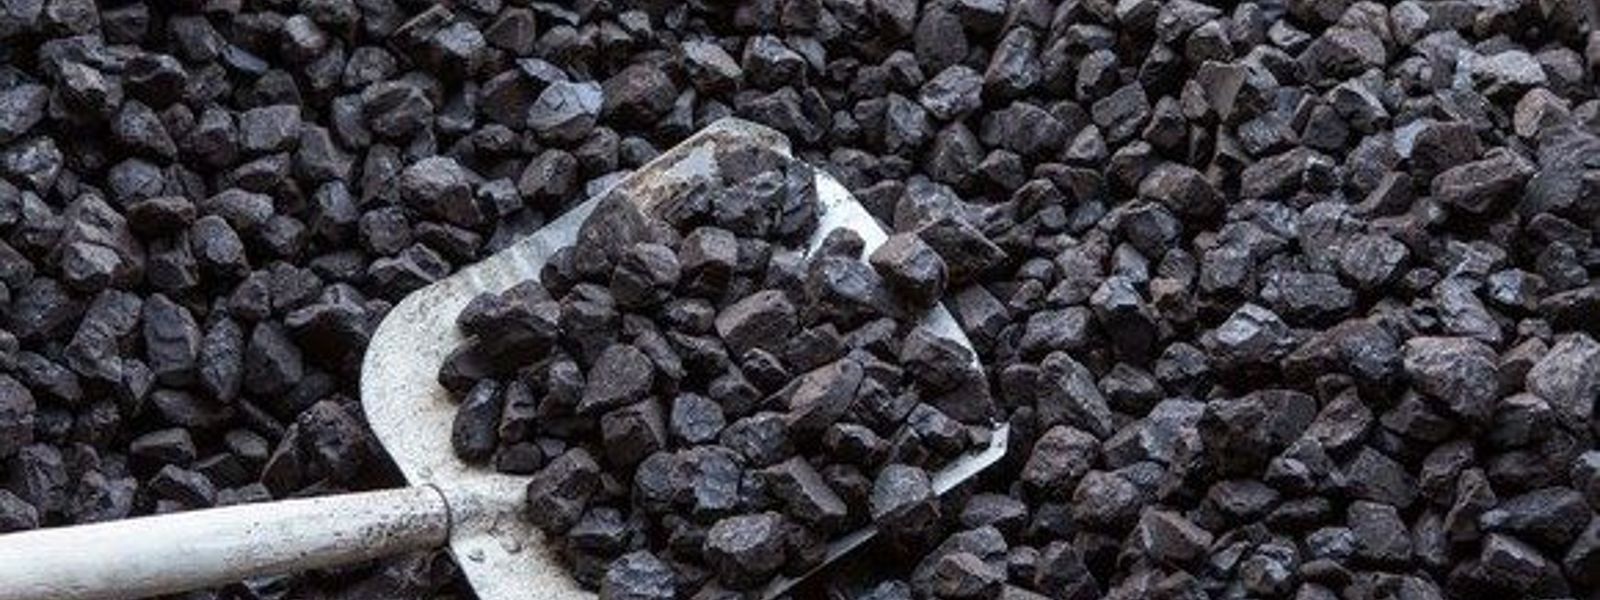 Coal Update: Sri Lanka pays for Coal Shipment